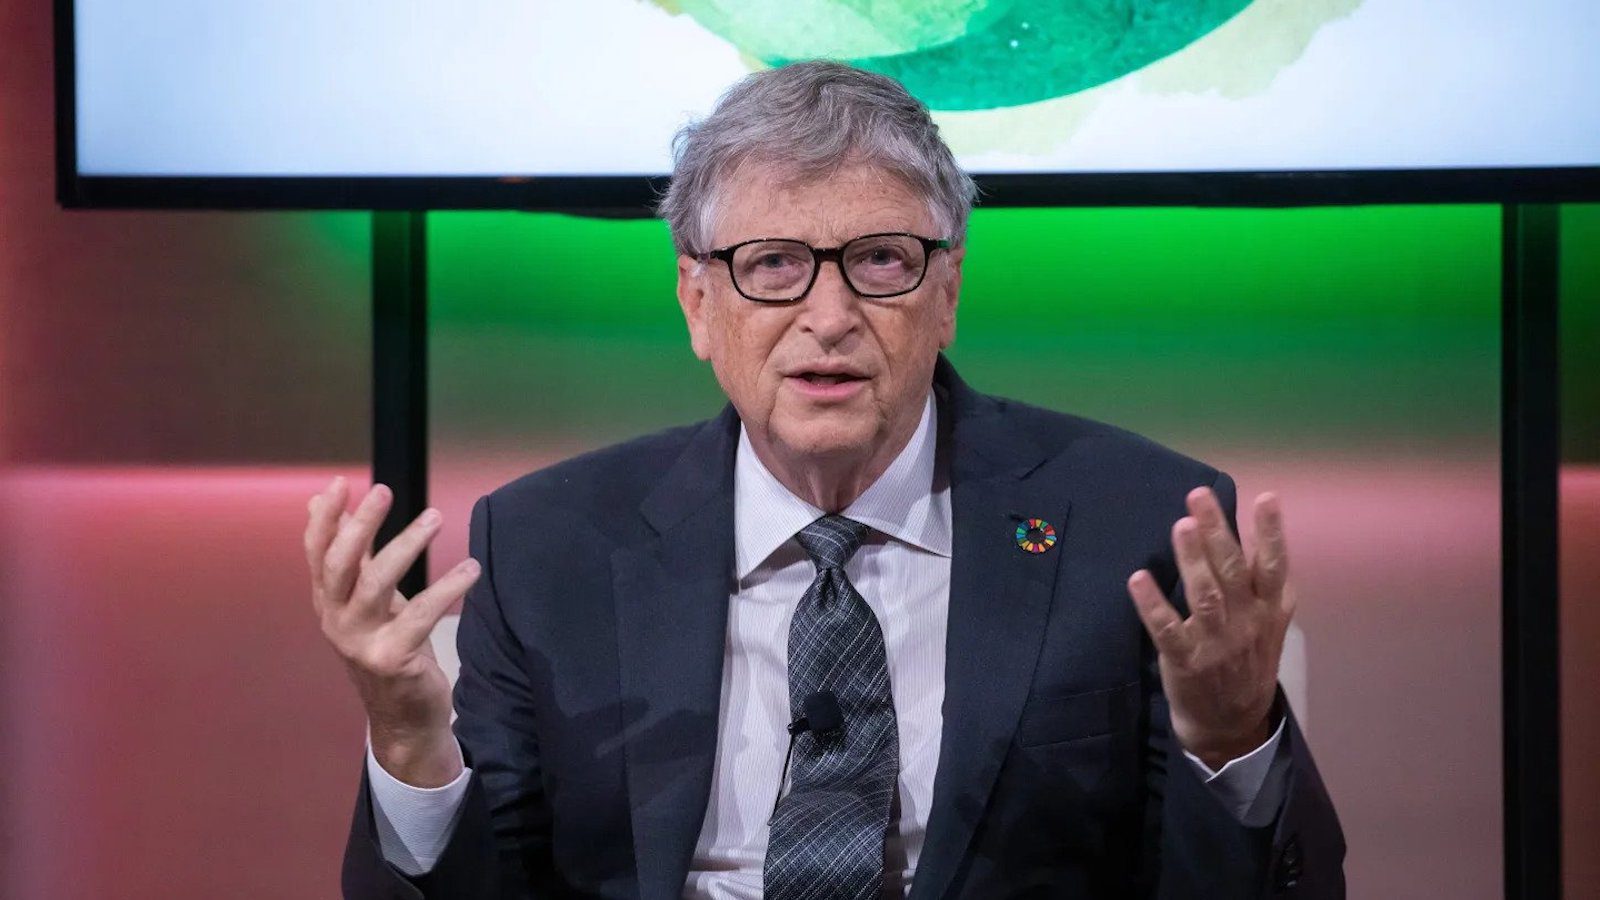 Gates Foundation Pledges $1.2B to Eradicate Polio